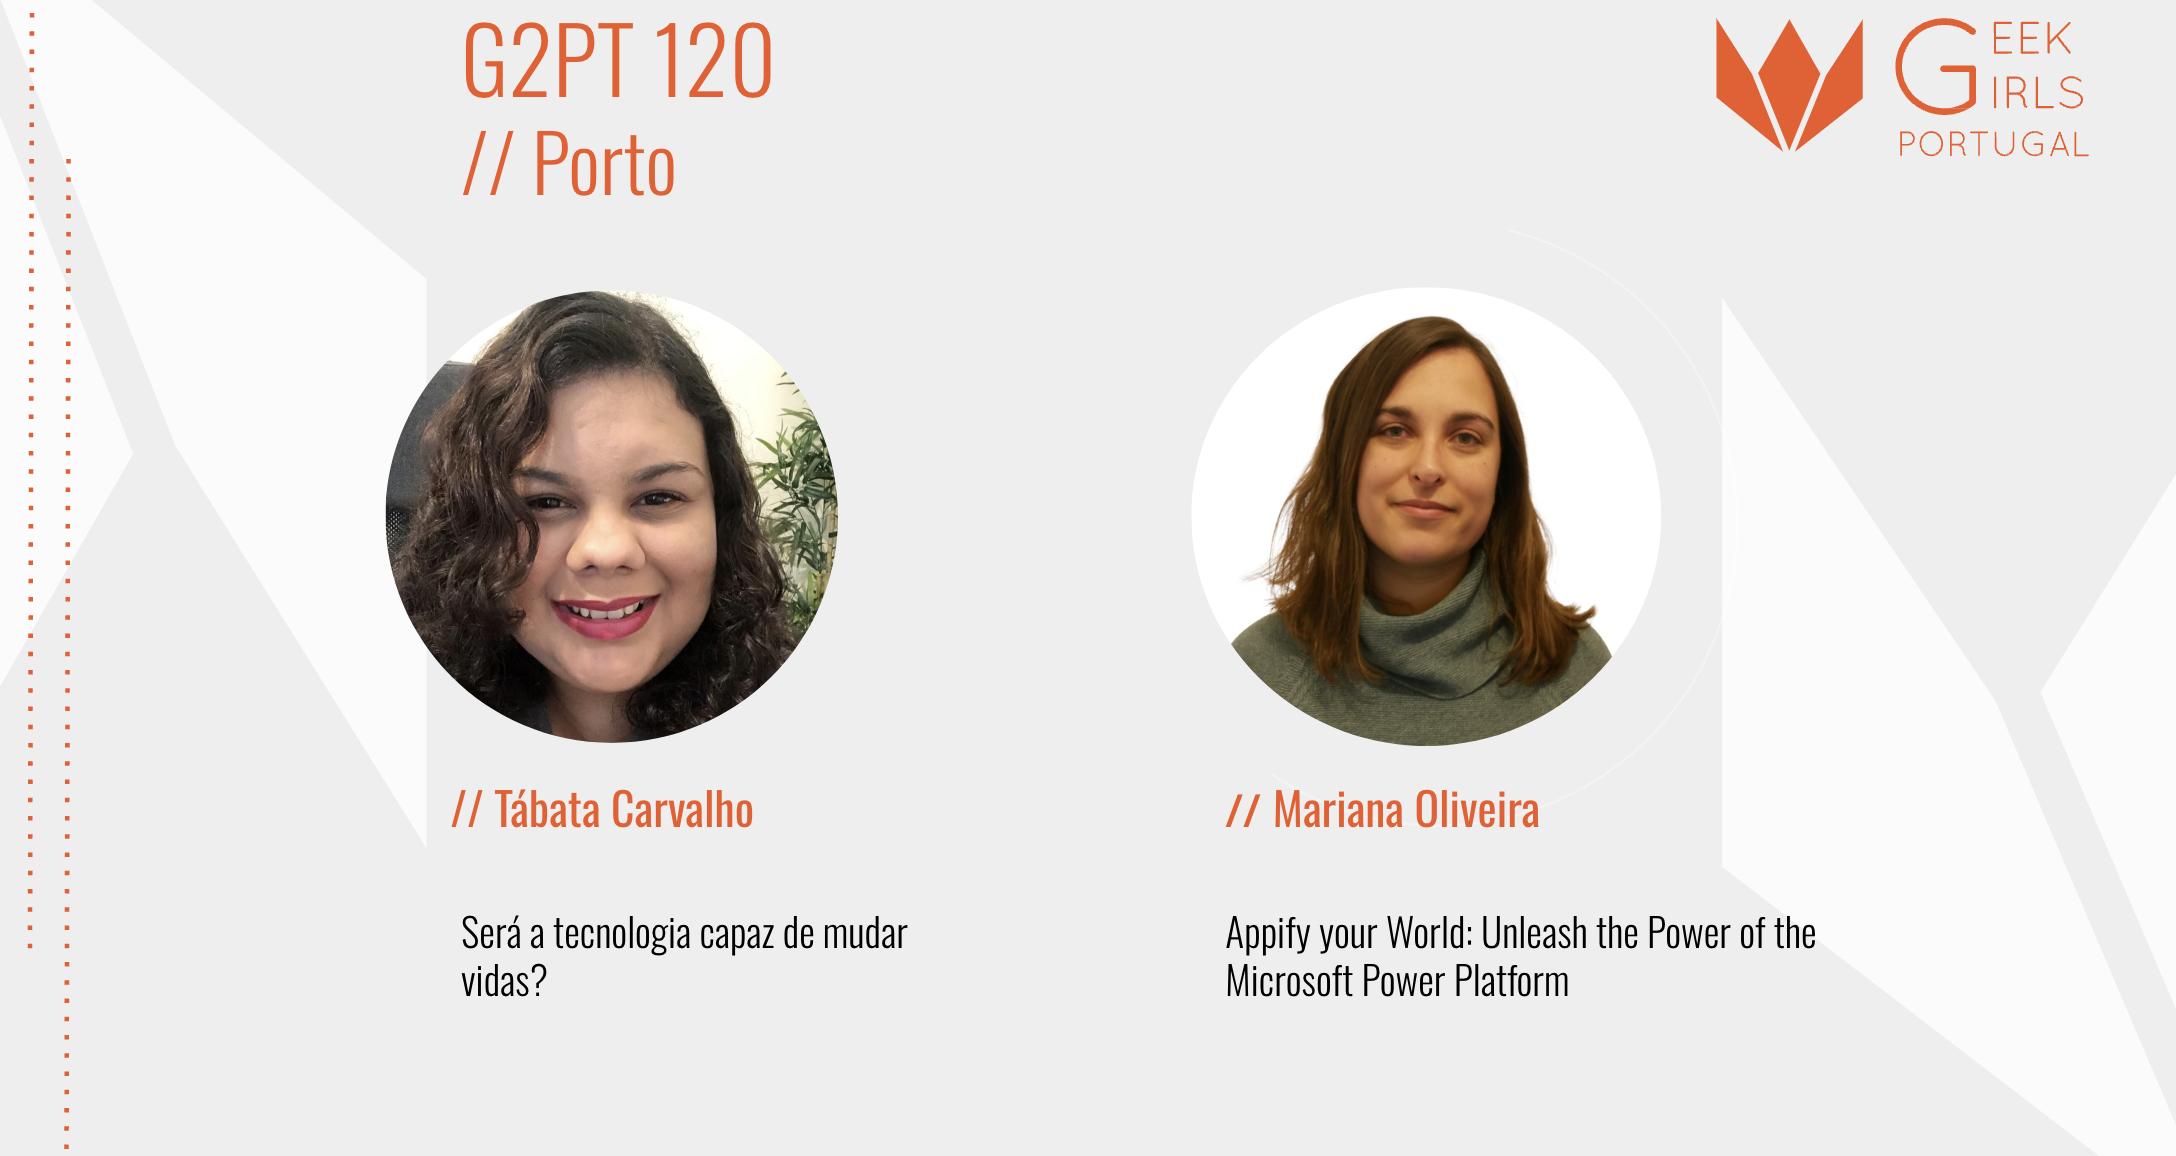 G2PT120- 120º Geek Girls Portugal – Porto